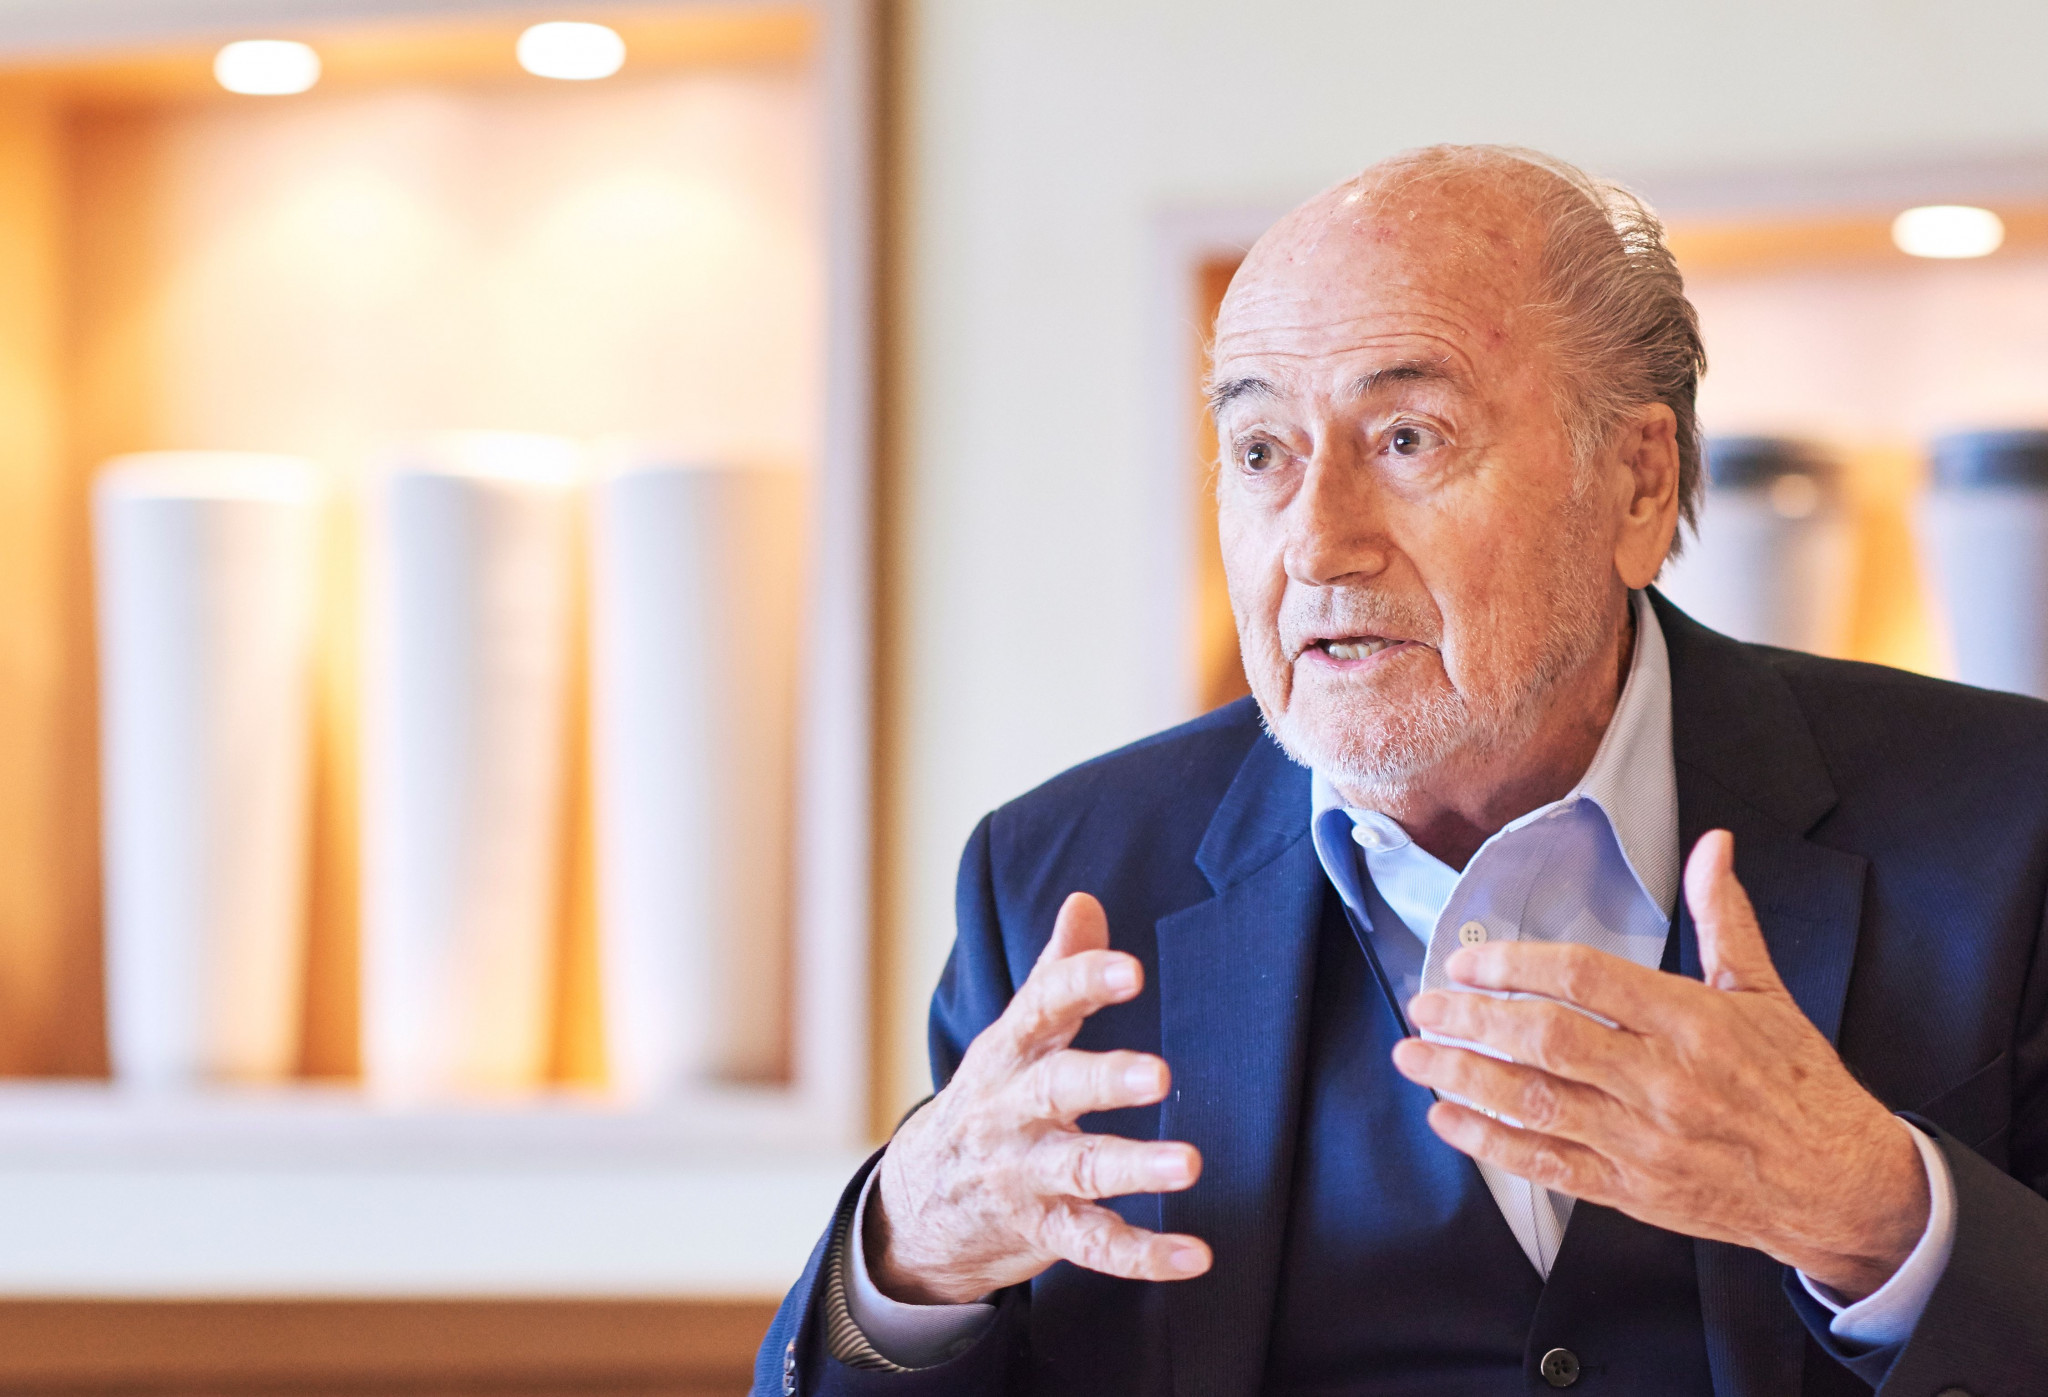 Disgraced former FIFA President Sepp Blatter told Bonita Mersiades that Australia had 